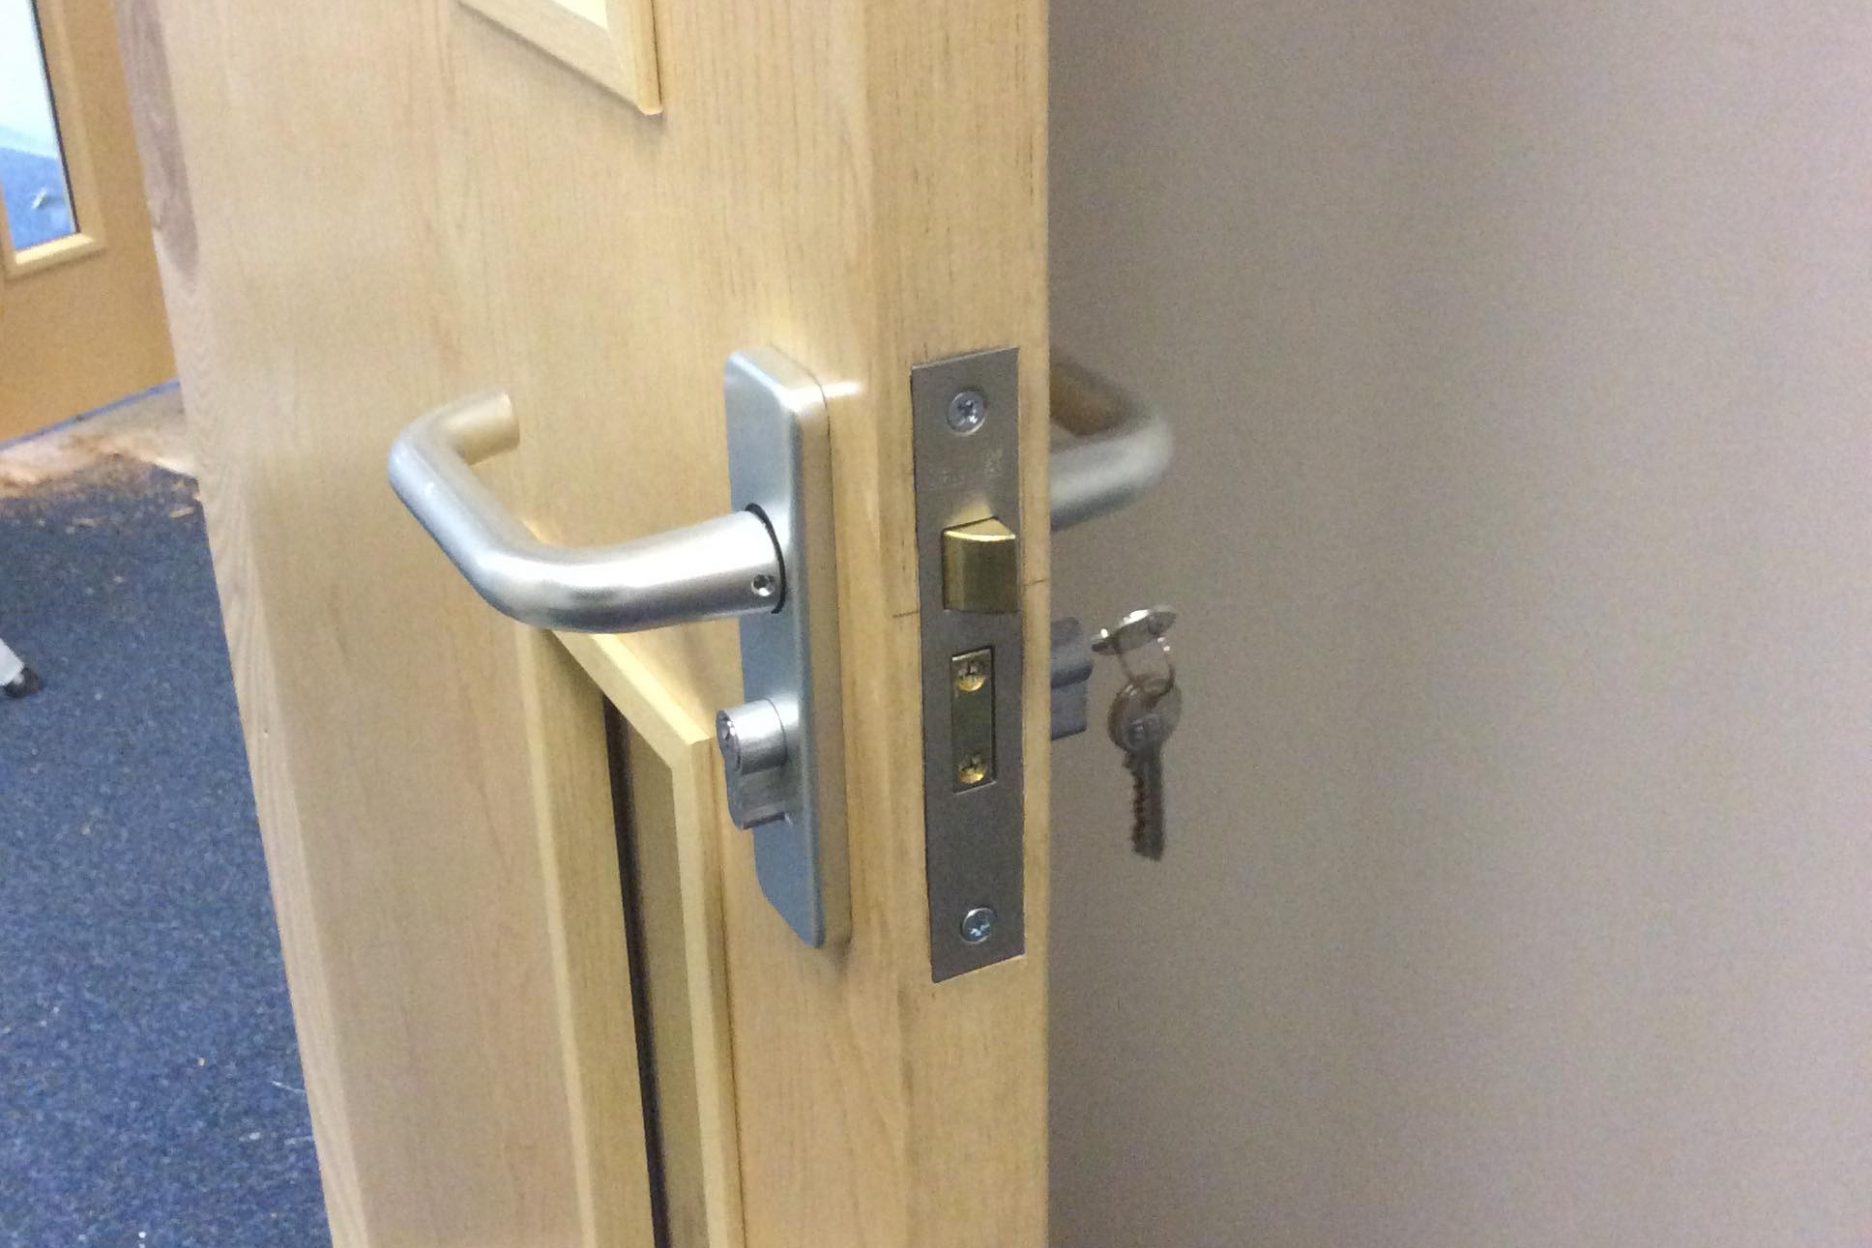 View of lock hings in door